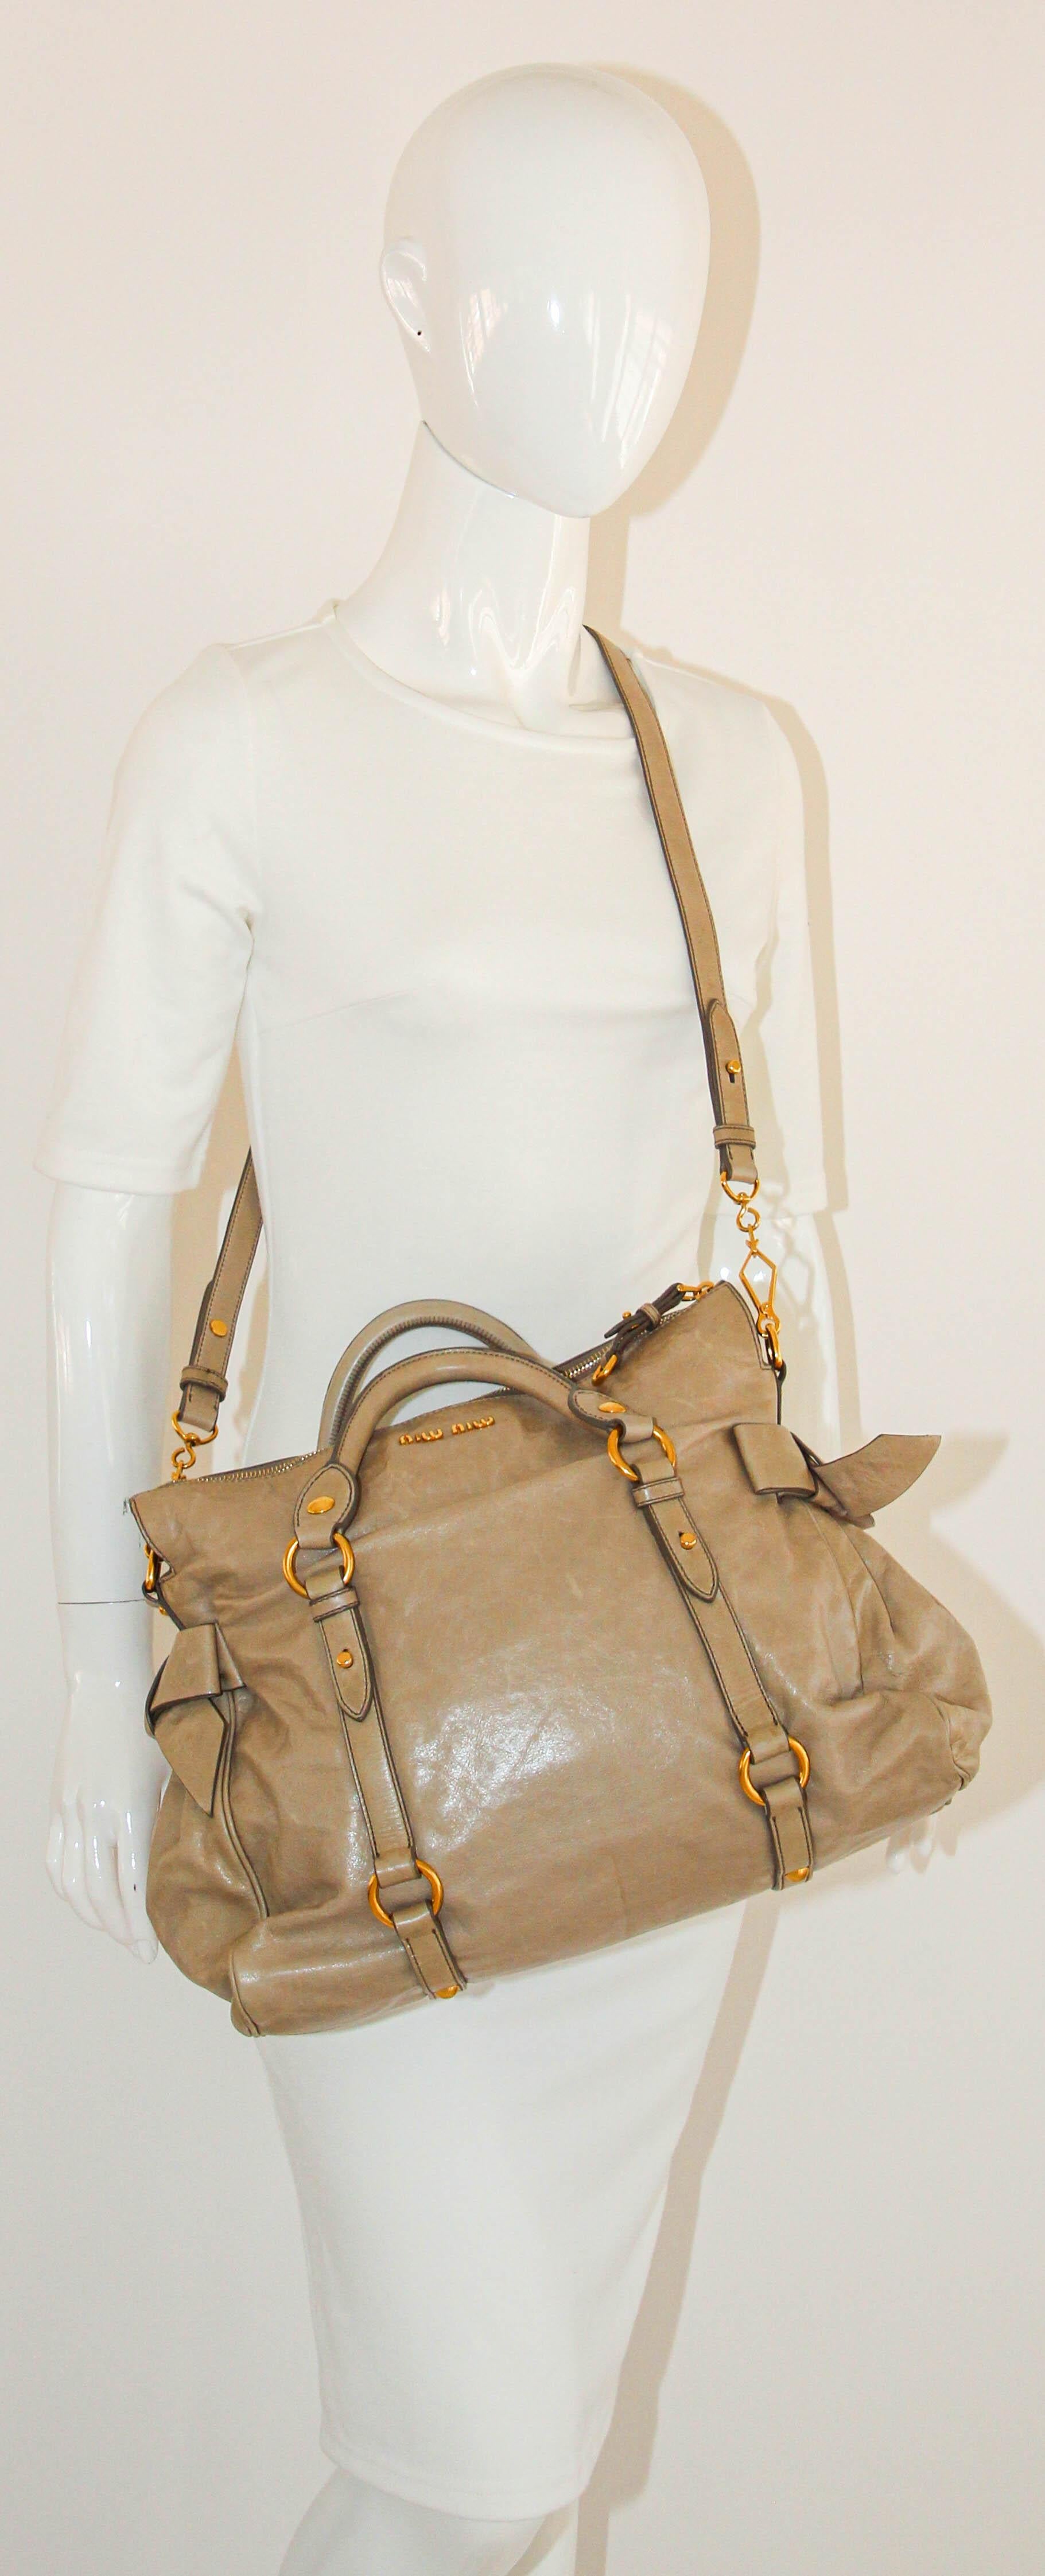 MIU MIU Beige Vitello Lux Bow Leather Hand Bag Satchel Tote For Sale 11